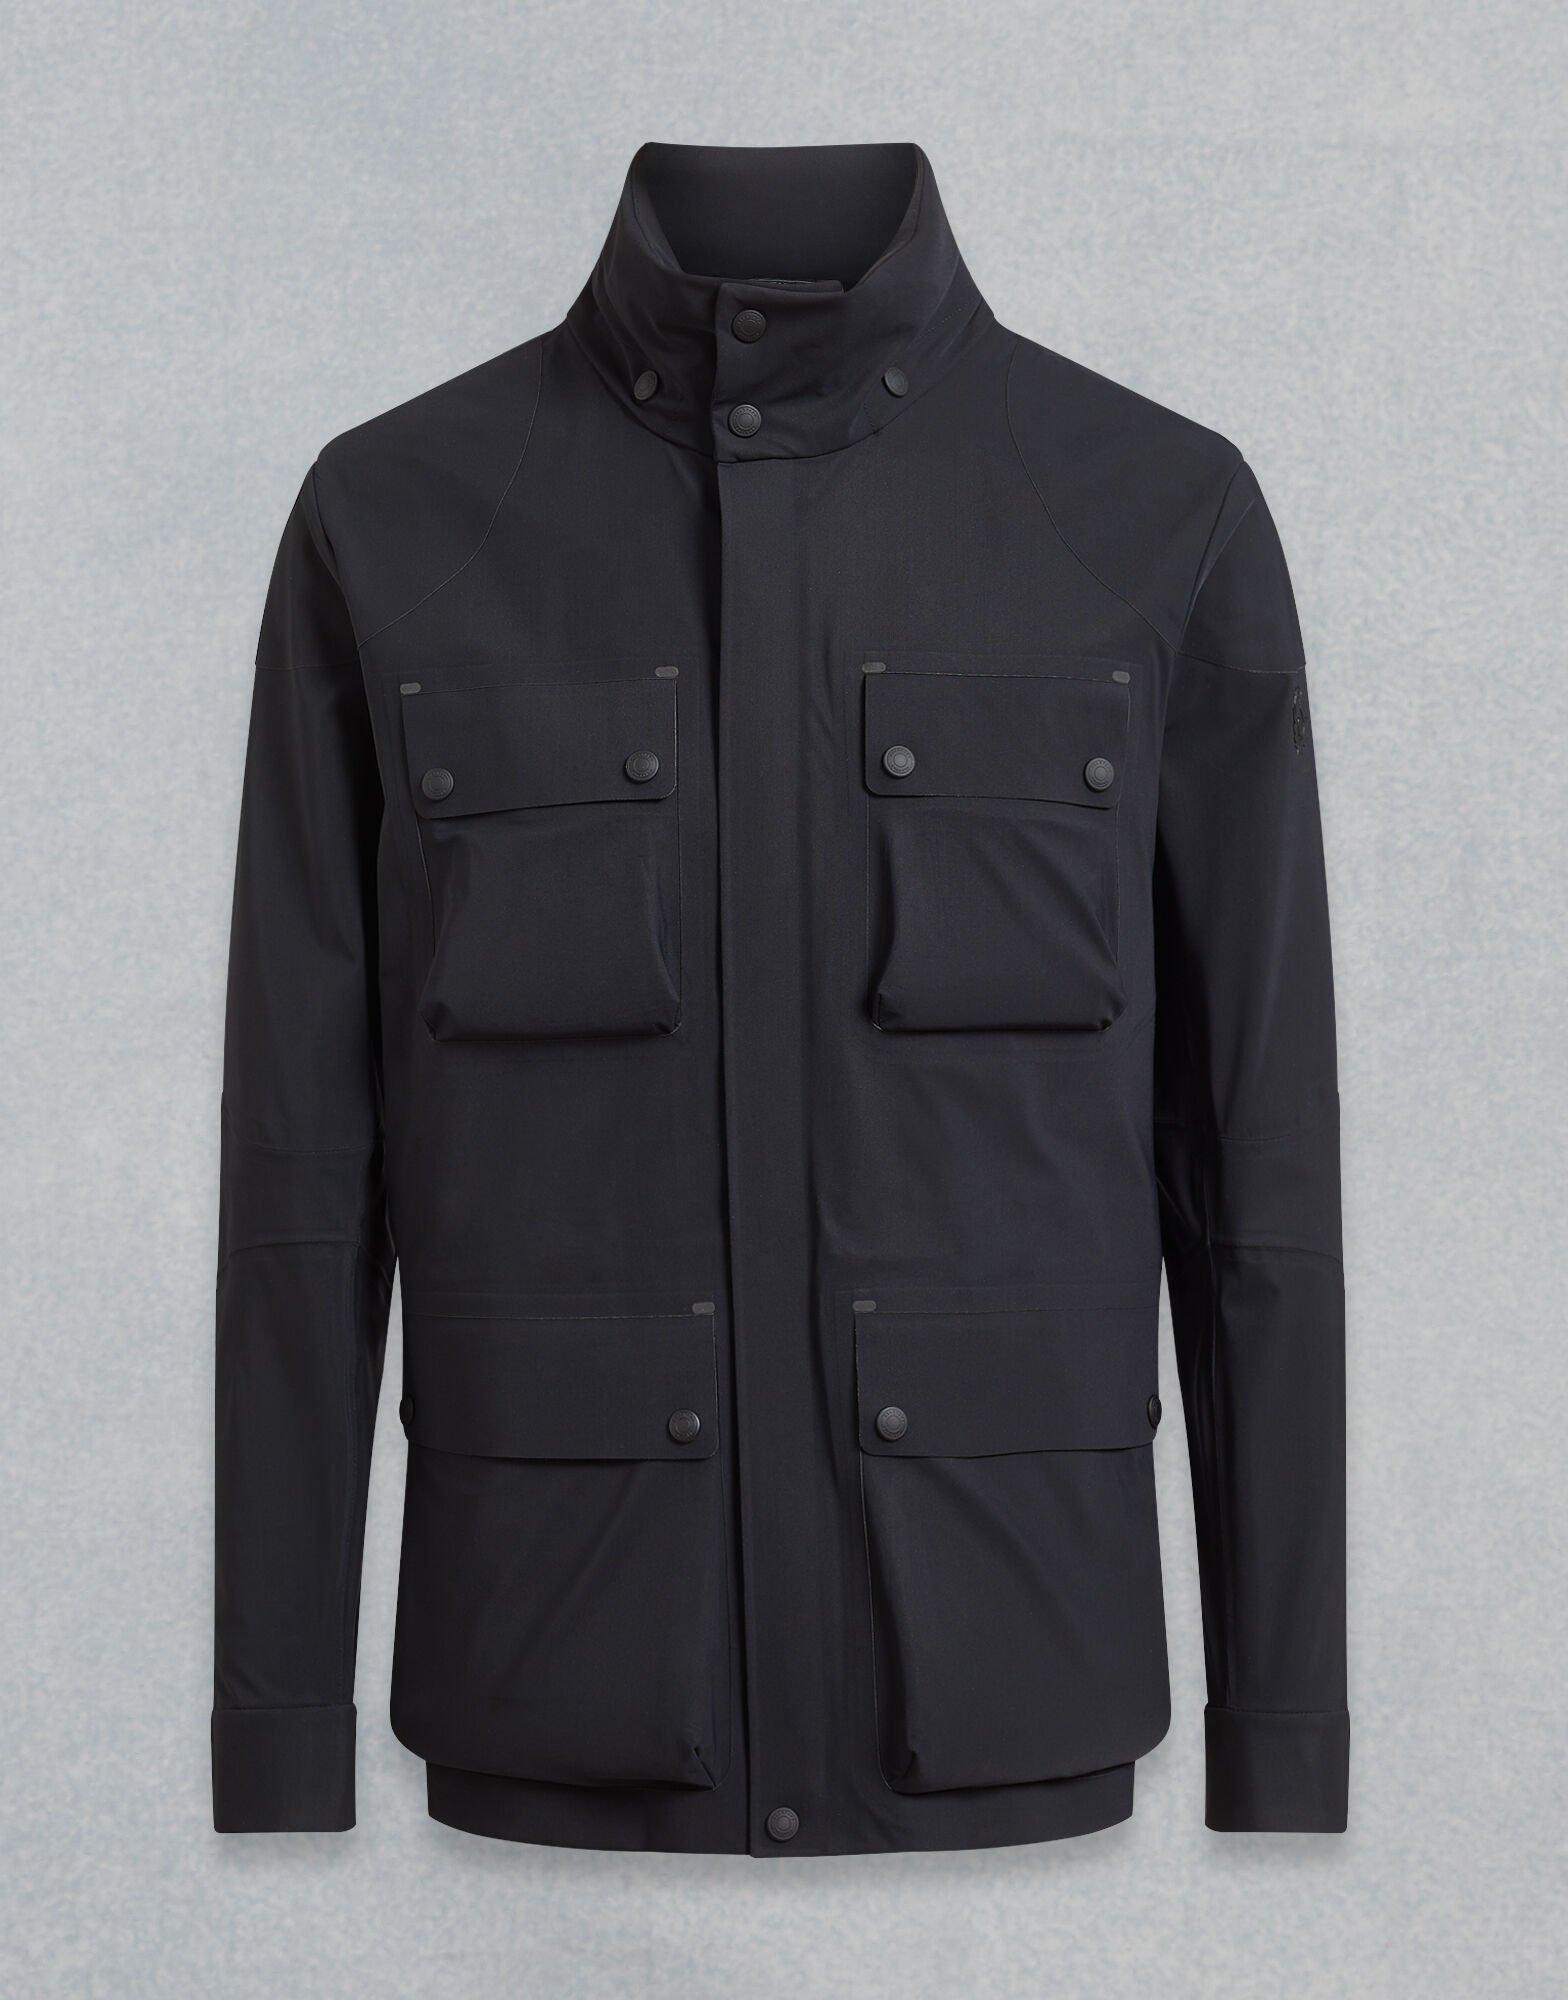 Belstaff Synthetic Trialmaster Evo Jacket in Black for Men - Save 70% ...